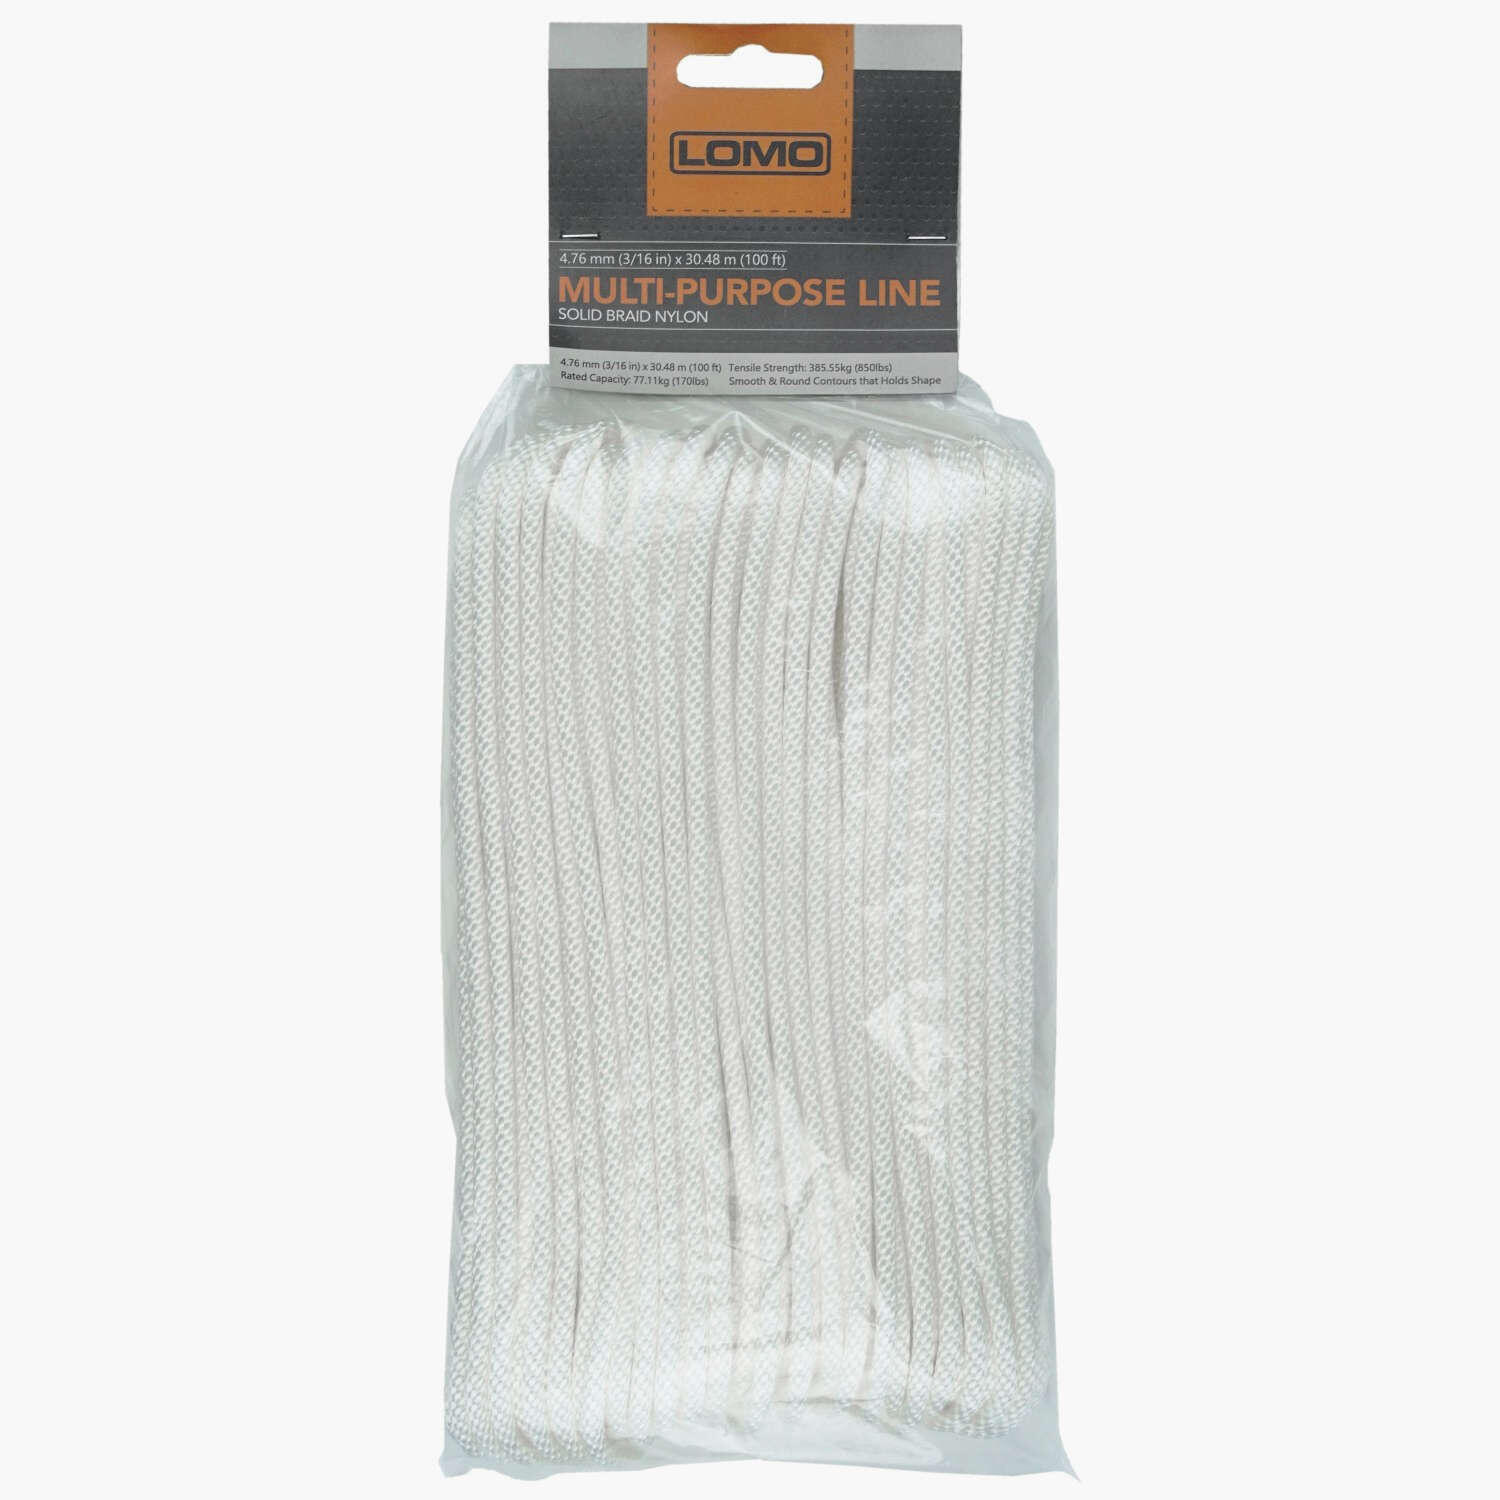 Lomo Multi Purpose Line, 4mm x 30m Solid Braid Nylon Rope - White 1/3